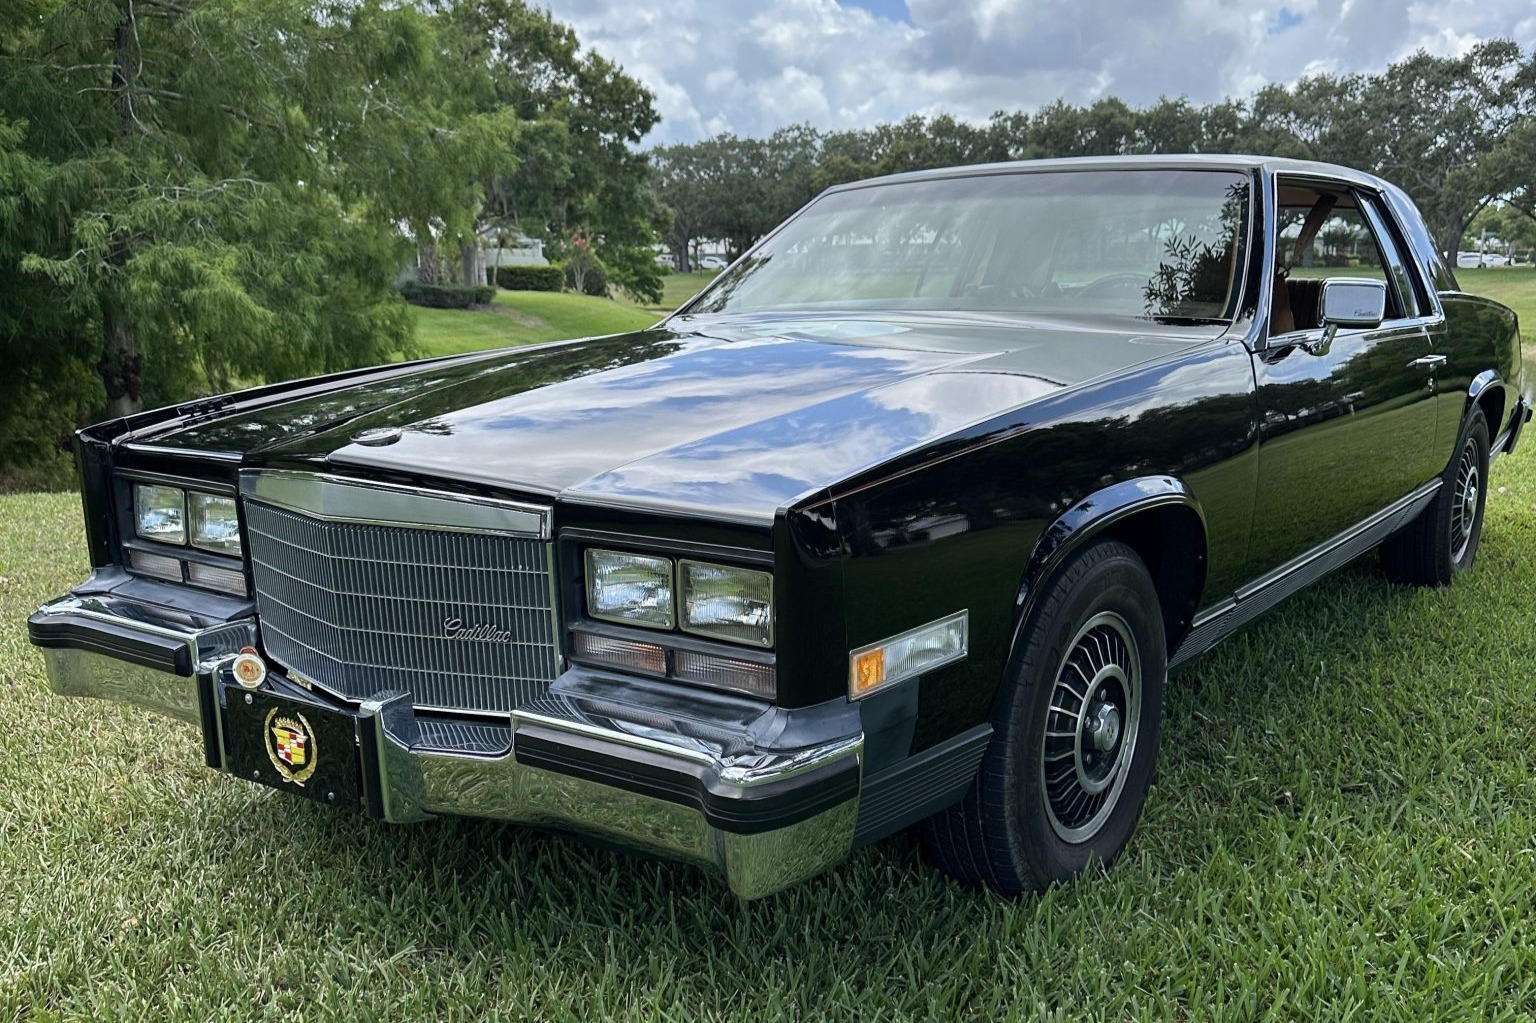 Used 1984 Cadillac Eldorado Touring Coupe Review